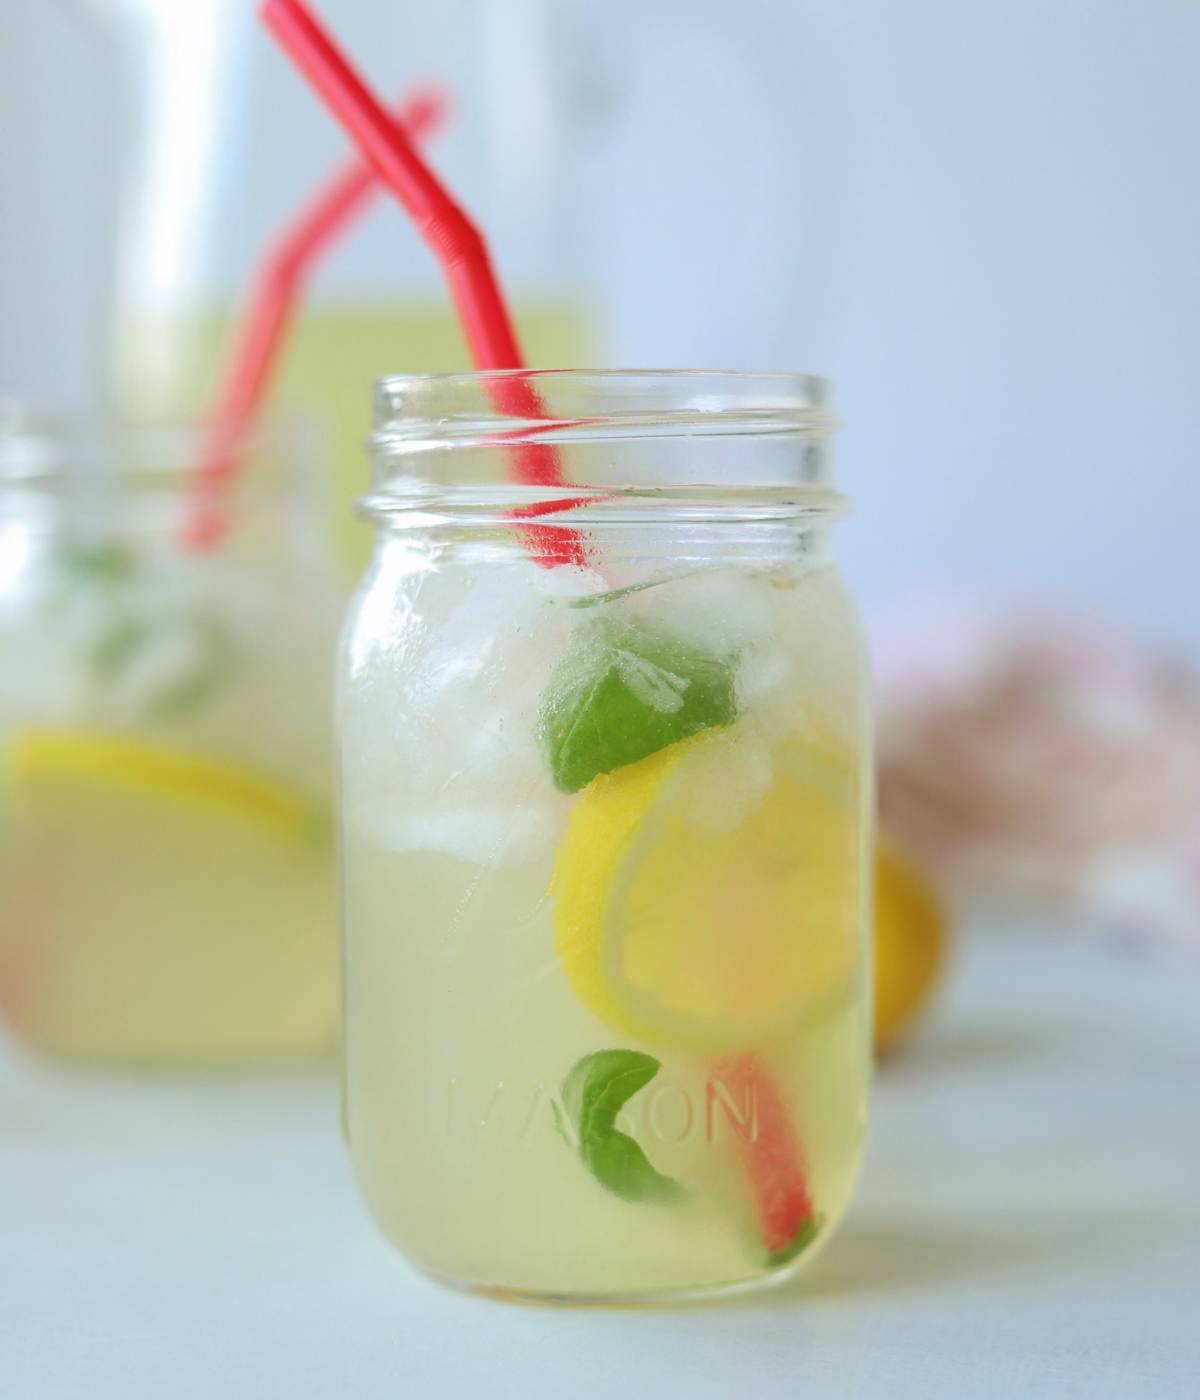 Glass of basil lemonade in mason jar with red straw.